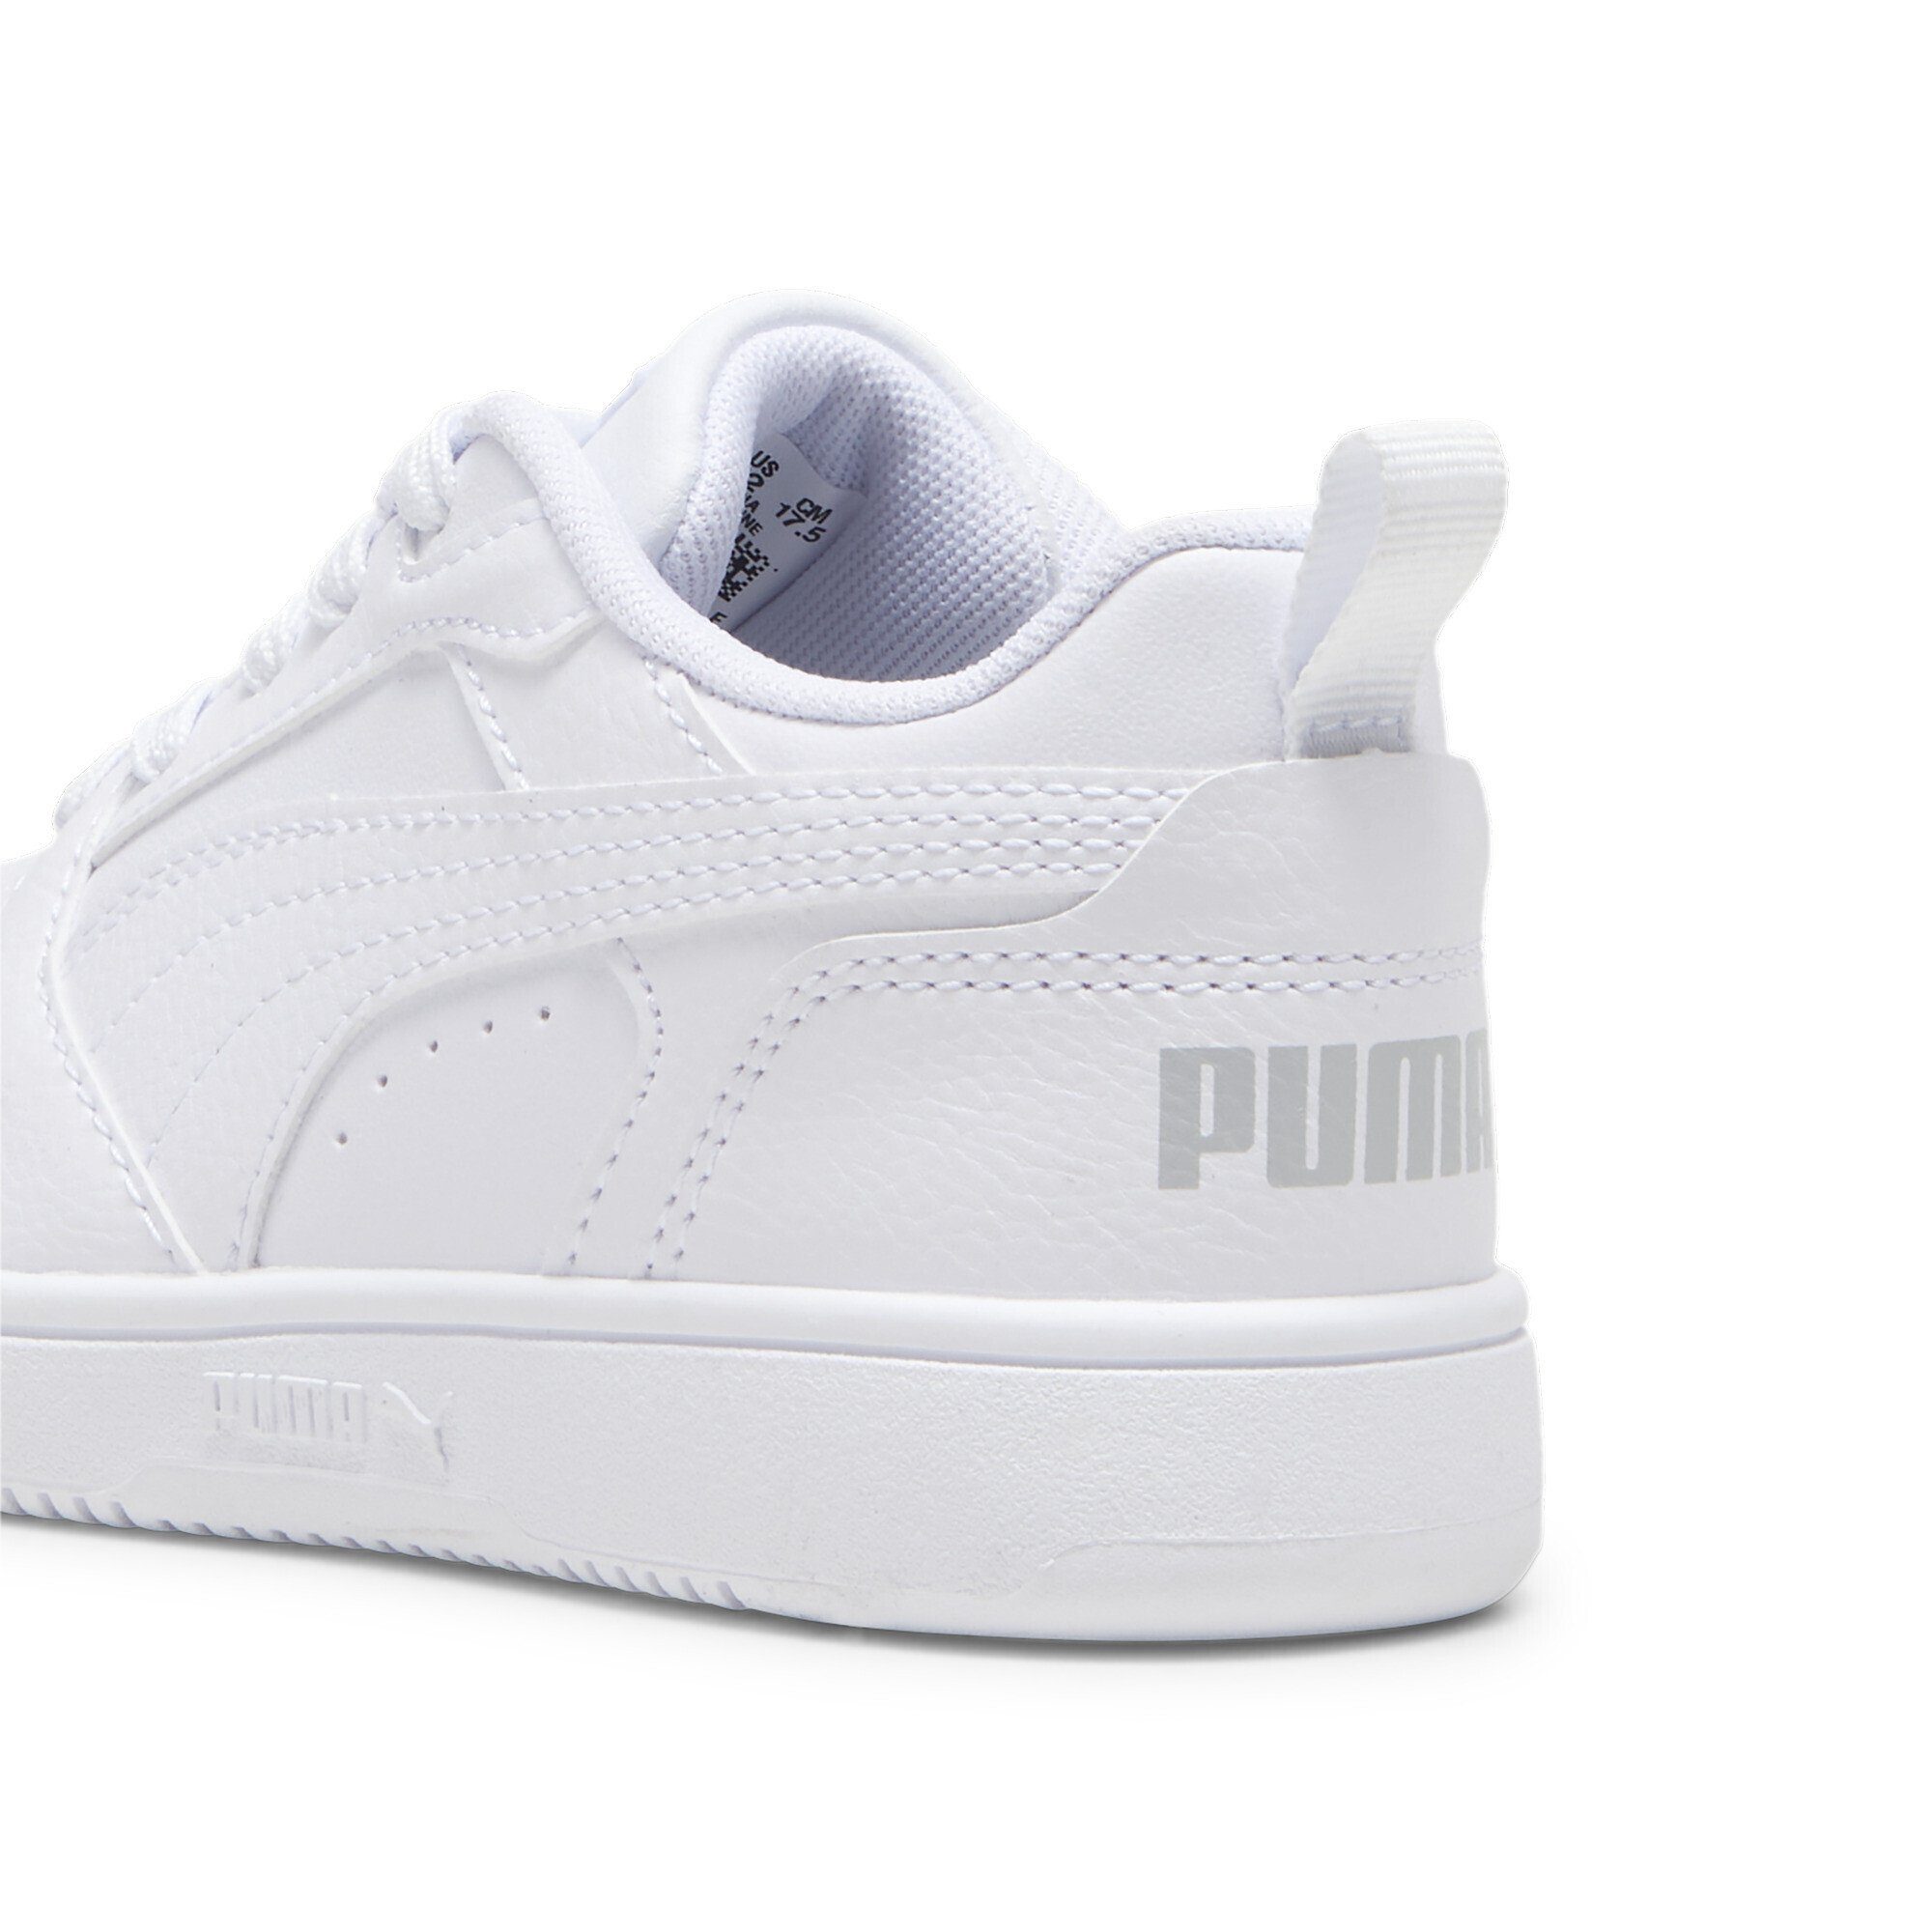 Rebound Lo PUMA Sneaker V6 White Cool Gray Sneakers Light